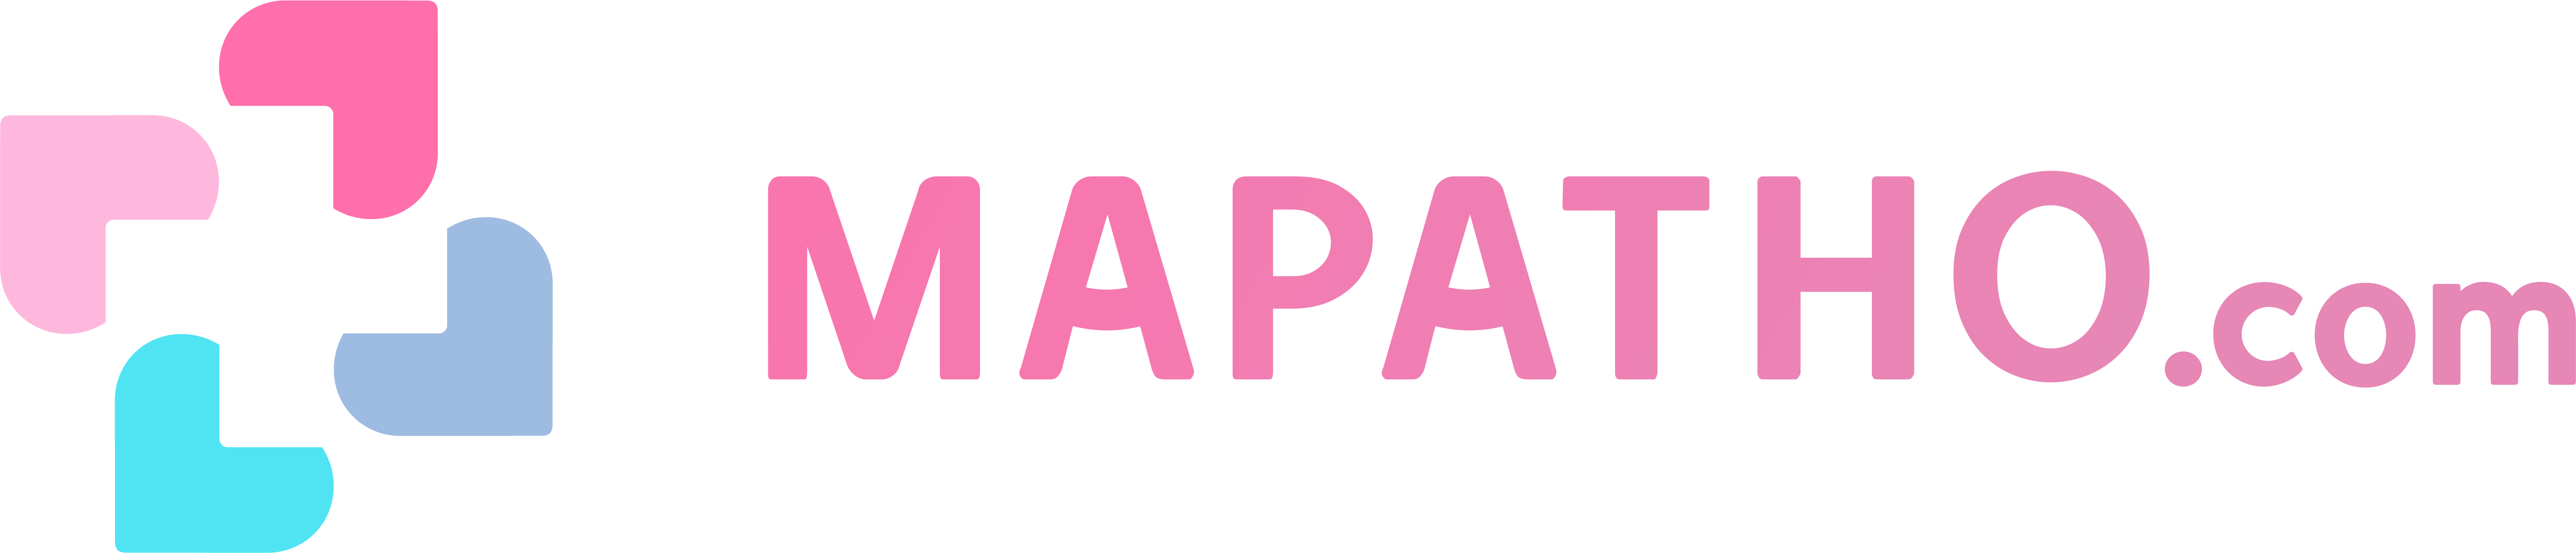 Mapatho-Logo-Long (1).png